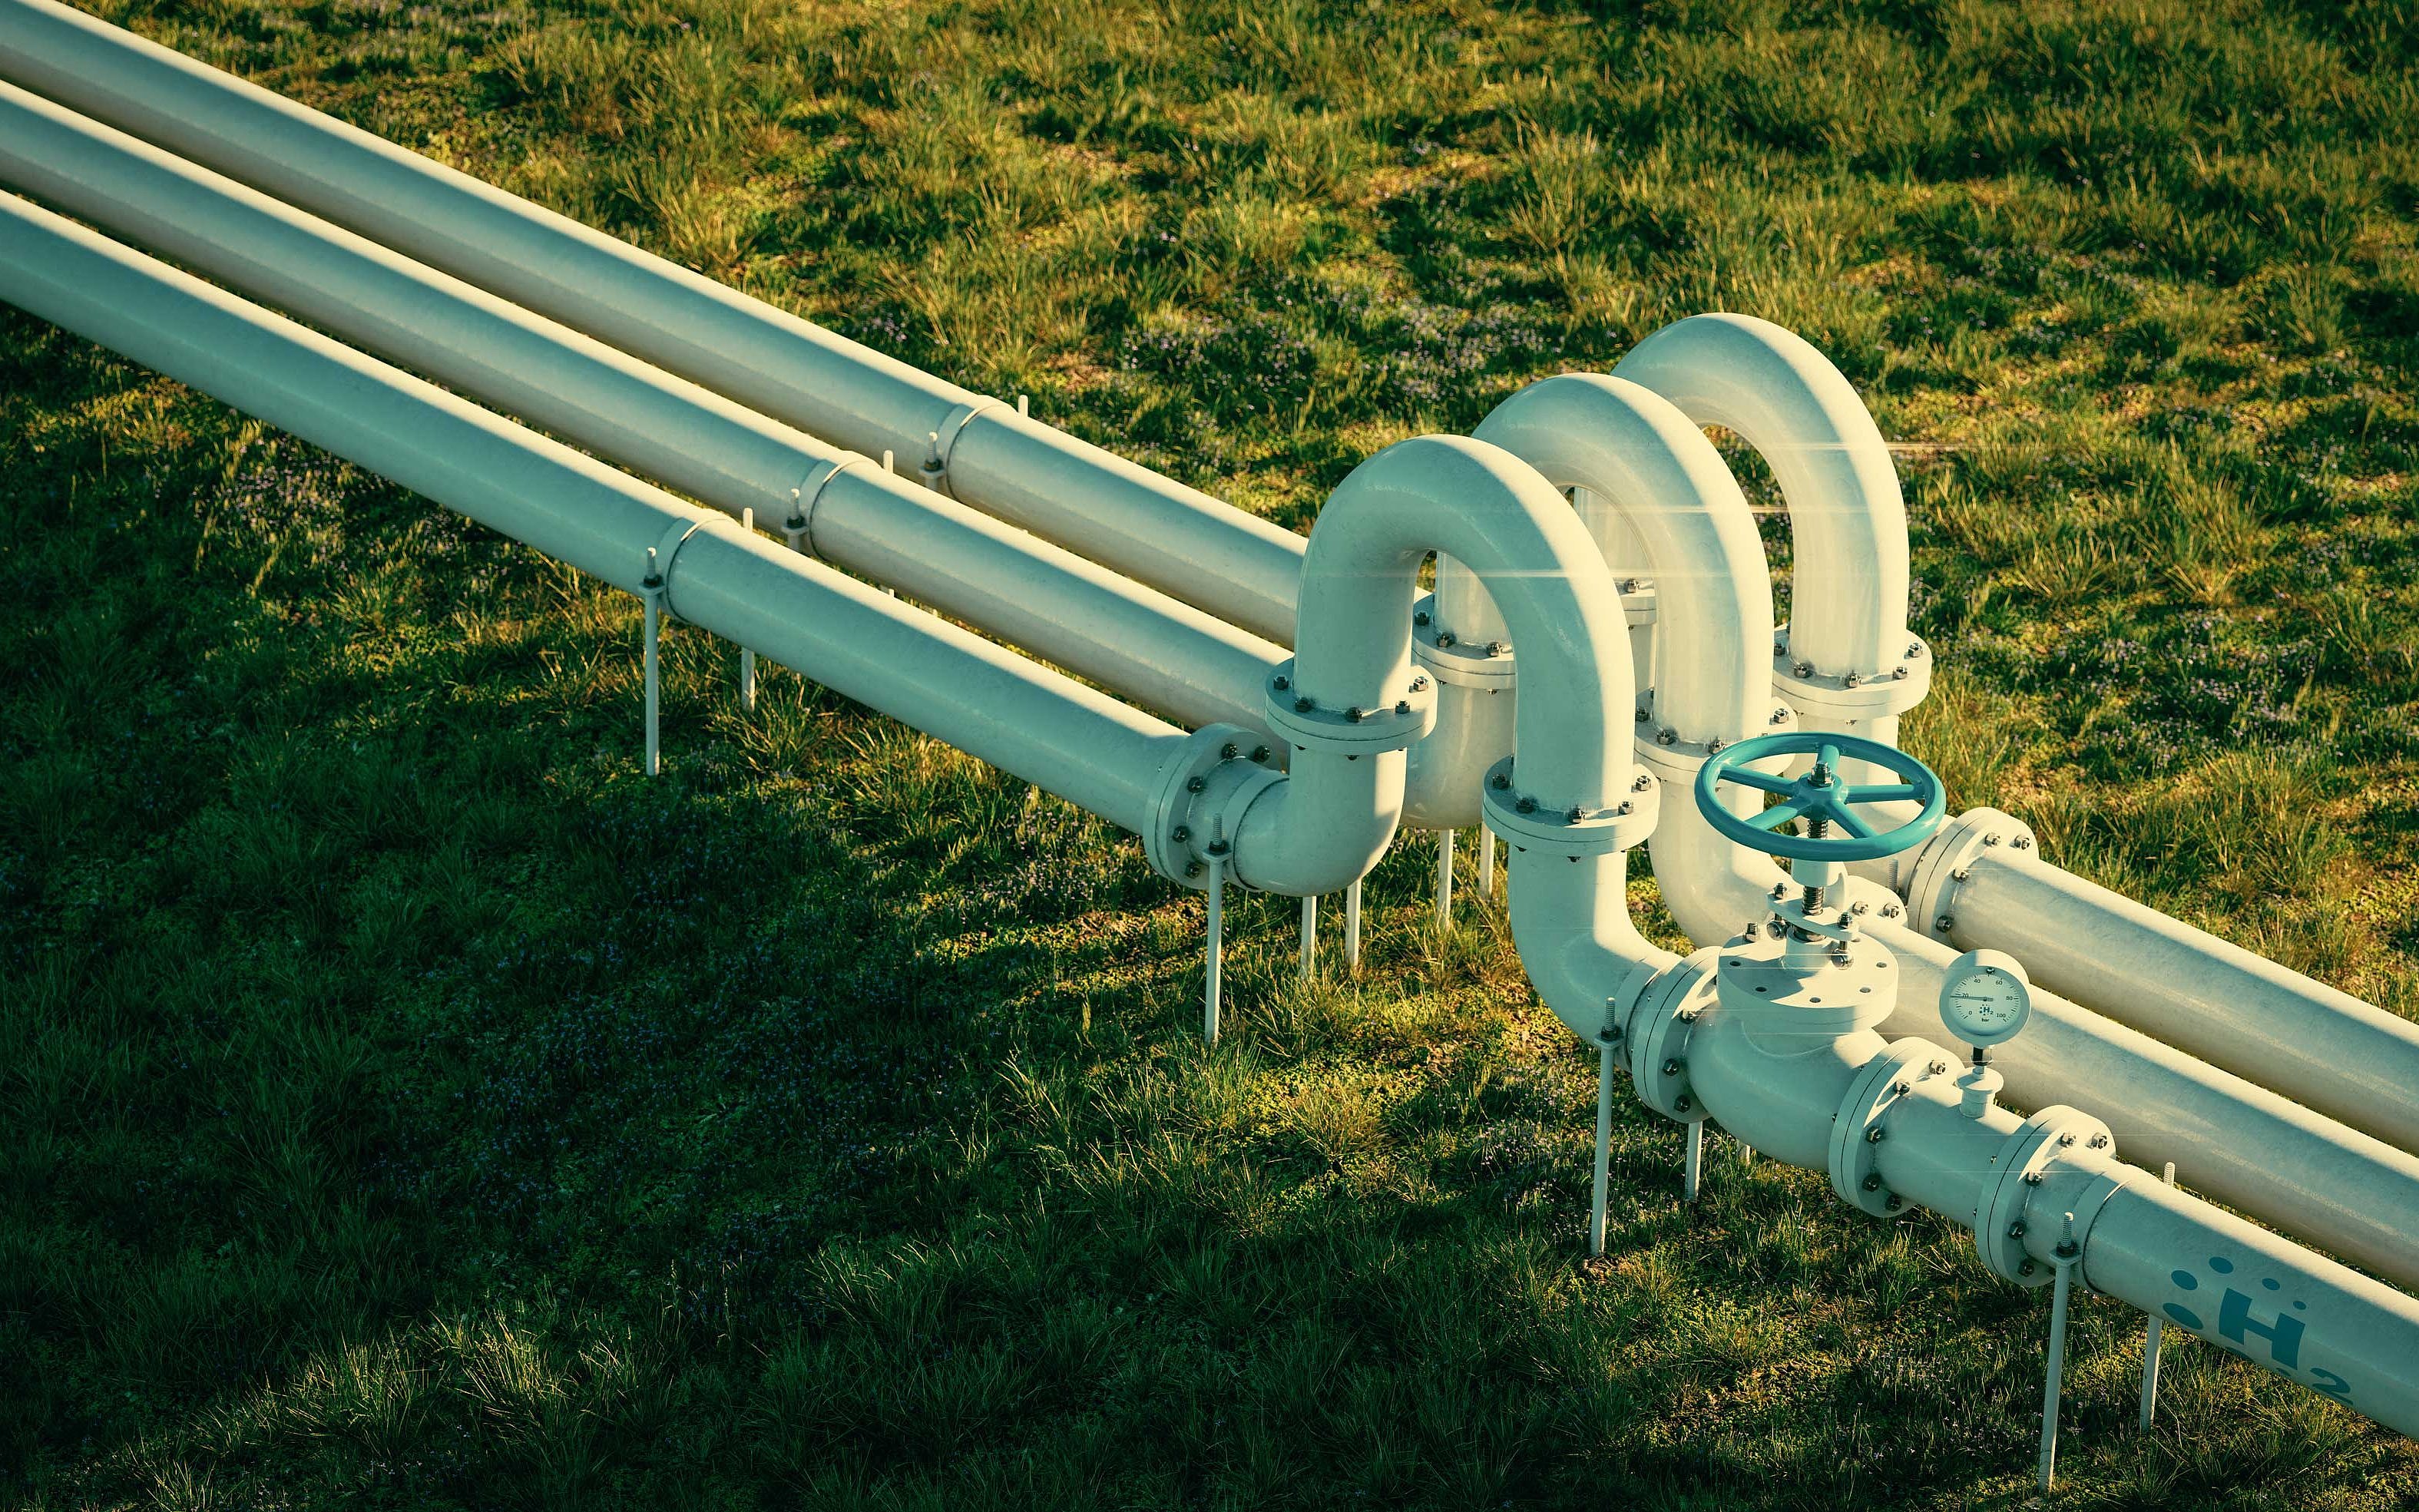 Pipeline zum Wasserstofftransport. Foto: malp – stock.adobe.com 